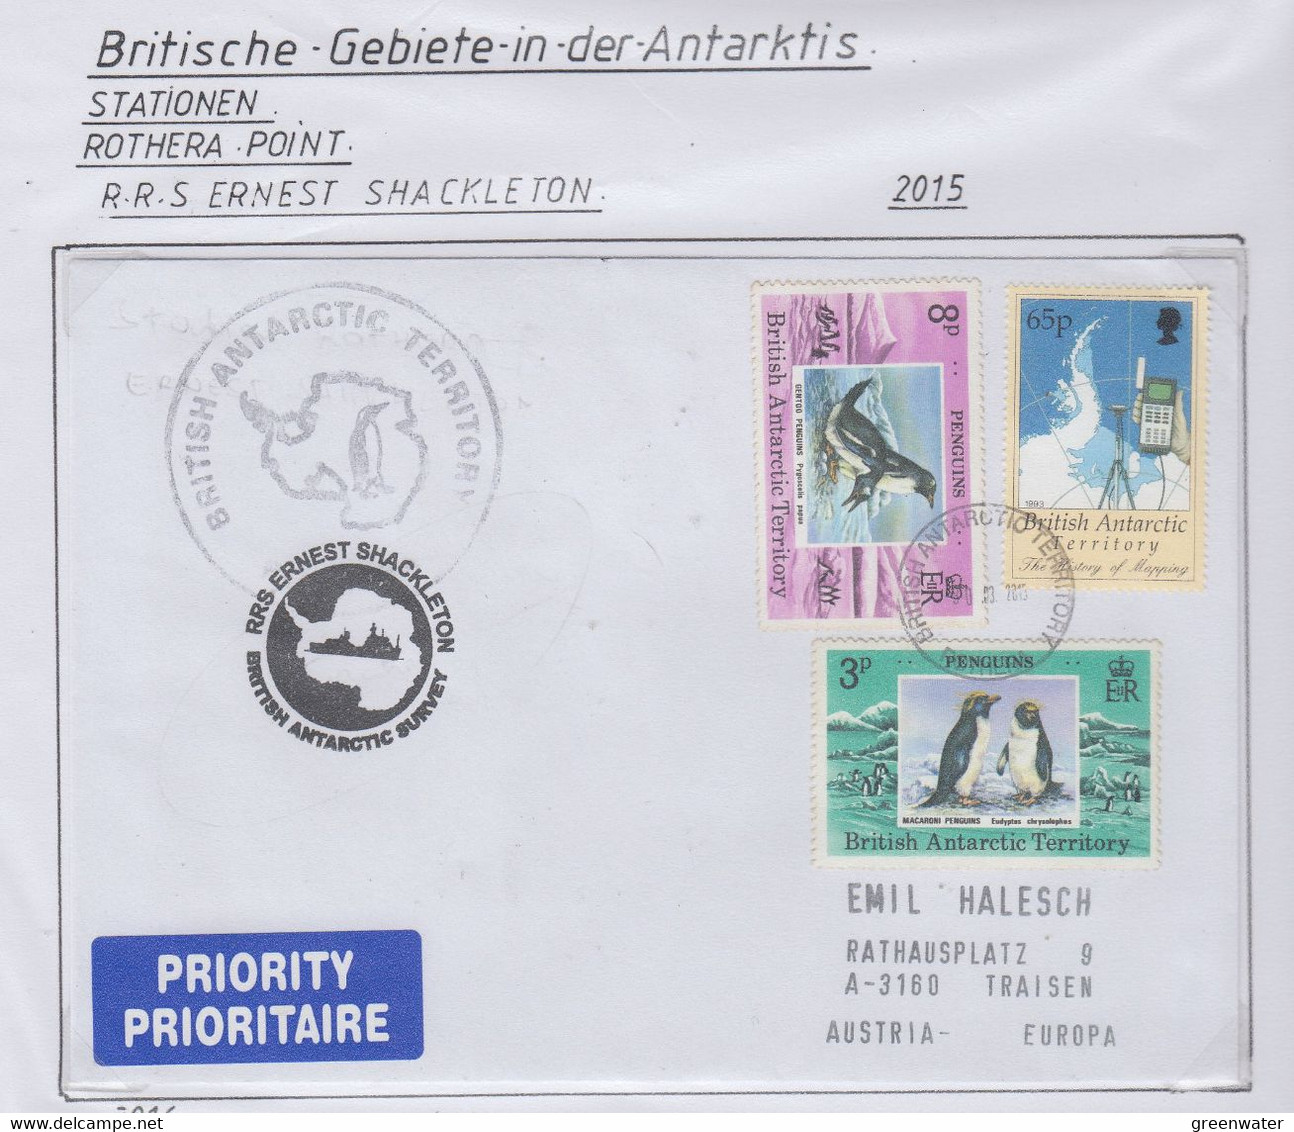 British Antarctic Territory (BAT)  2015 Cover Ship Visit RRS Ernest Shackleton Ca Rothera 12.03.2015 (RH185) - Briefe U. Dokumente